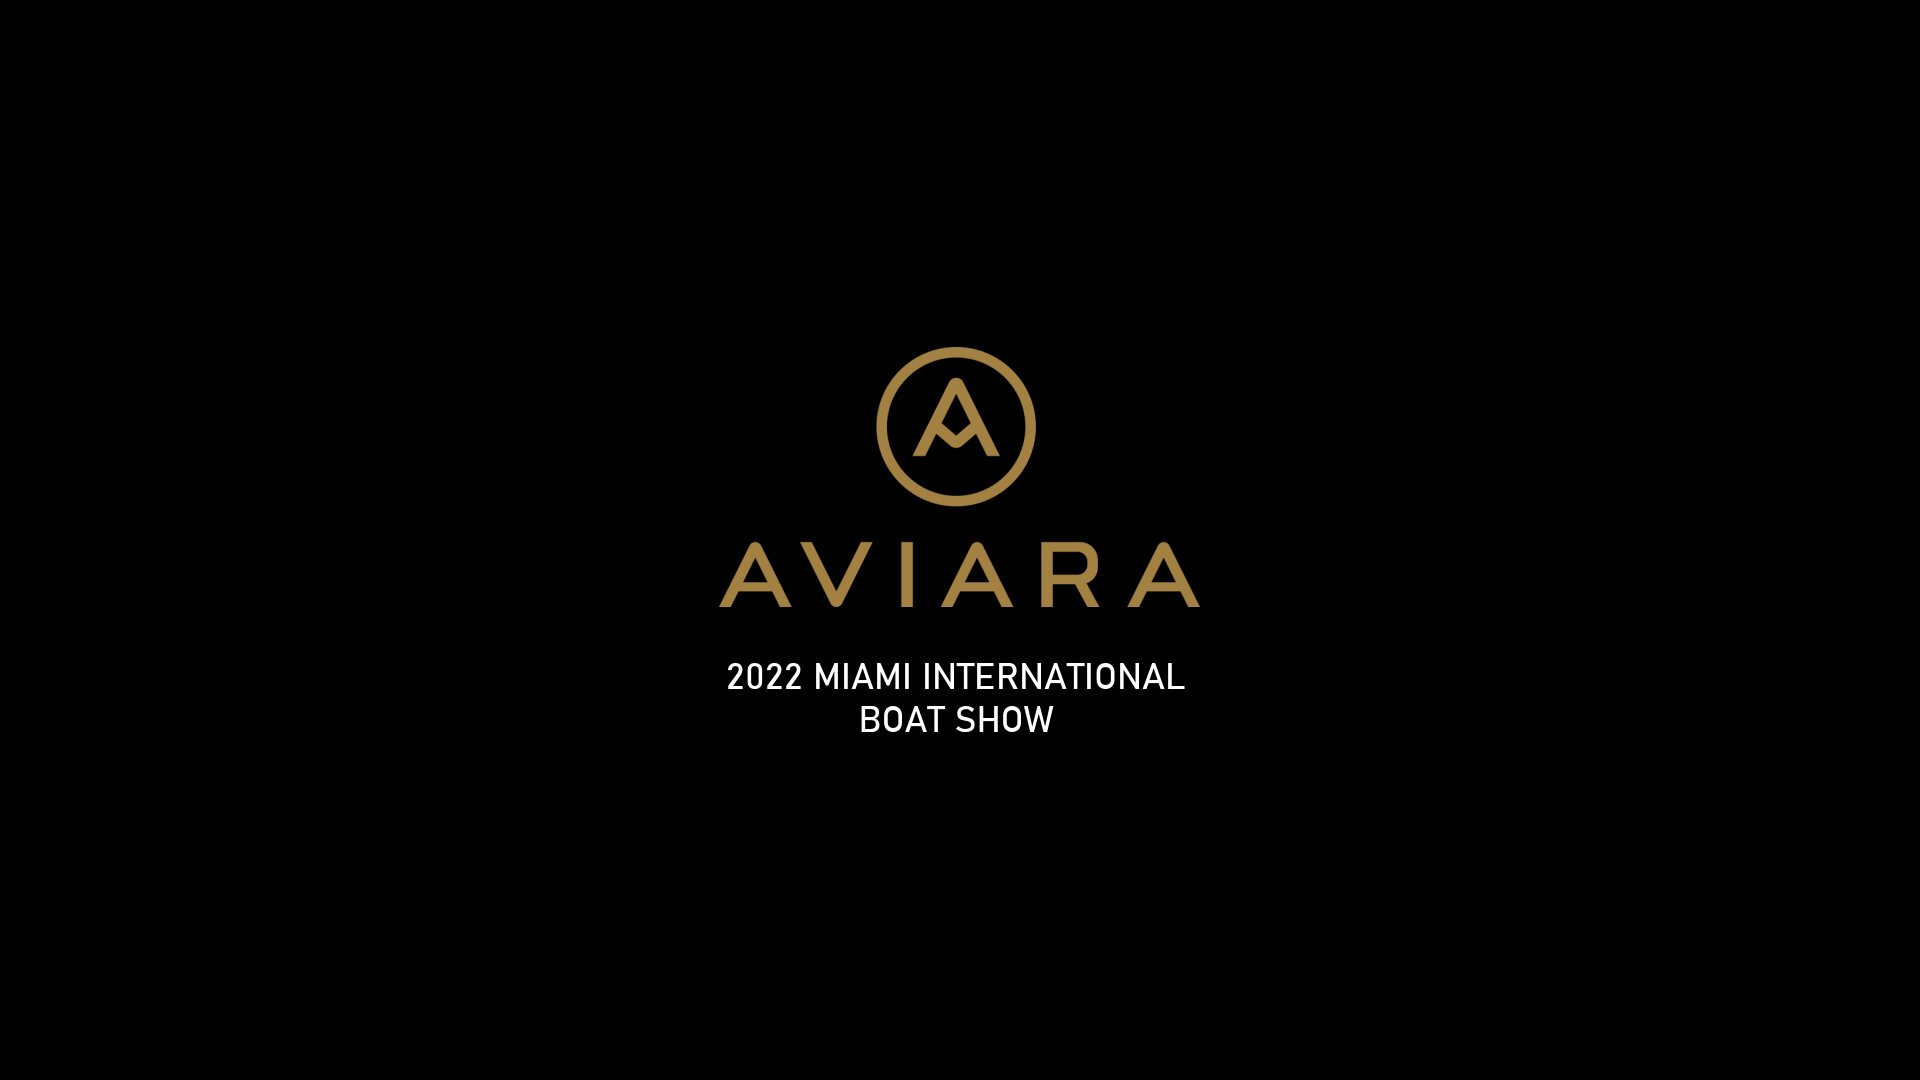 360 VR Virtual Tours of the Aviara Boats @ 2022 Miami International Boat Show